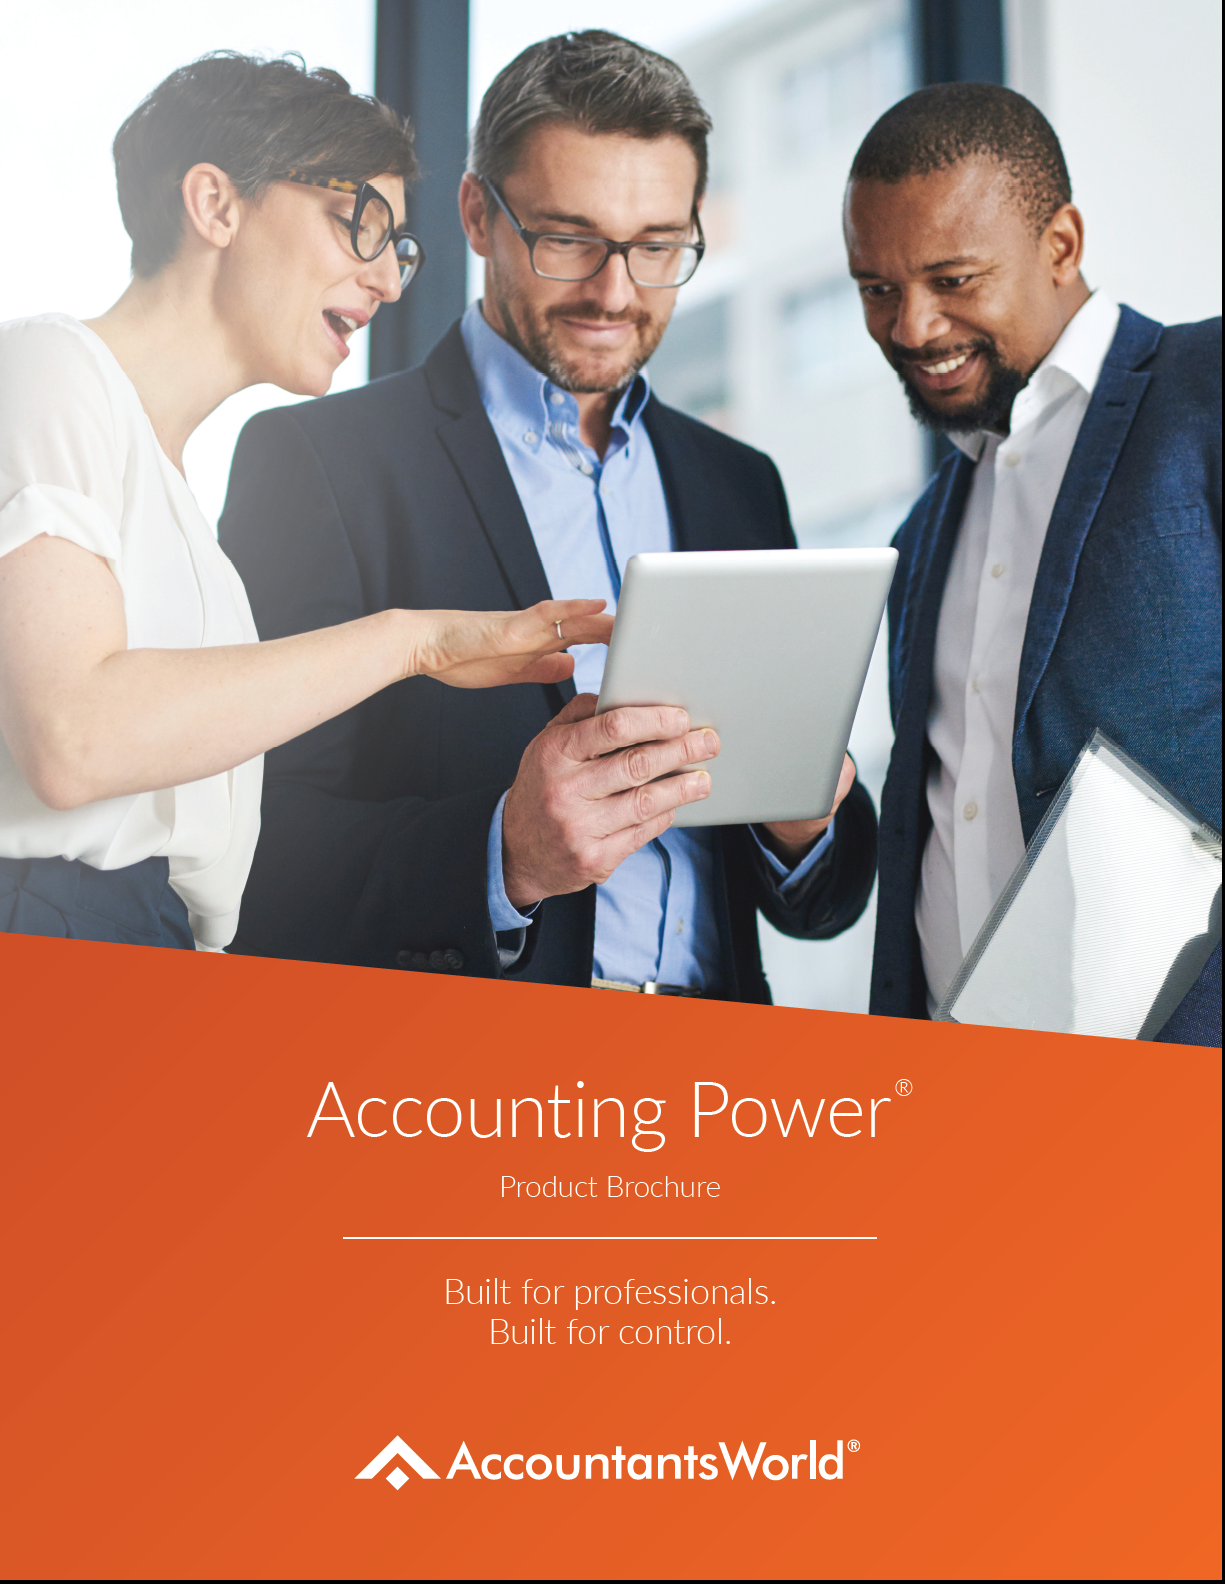 AccountingPower